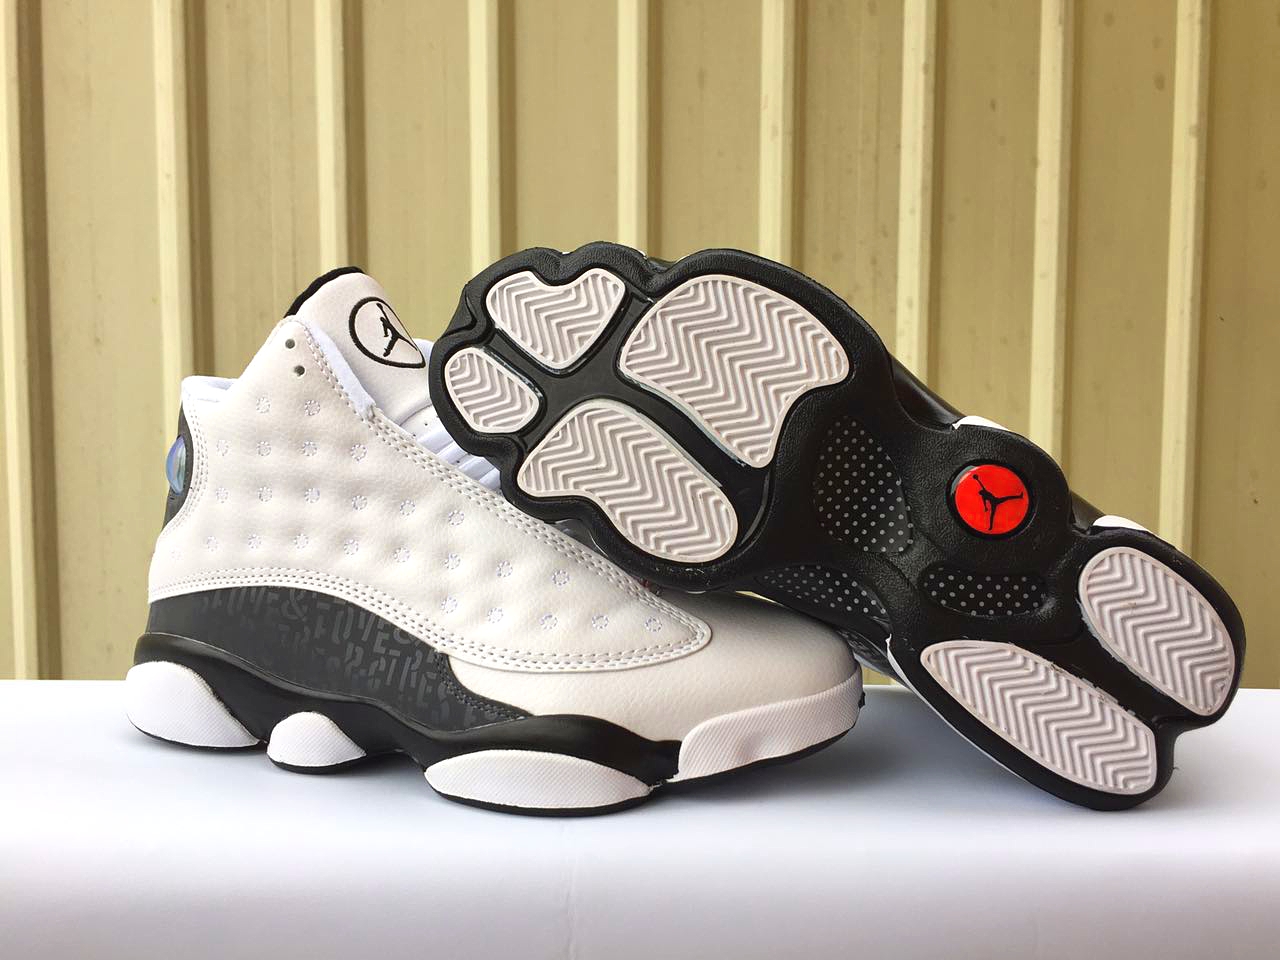 New Air Jordan 13 Love White Black Shoes